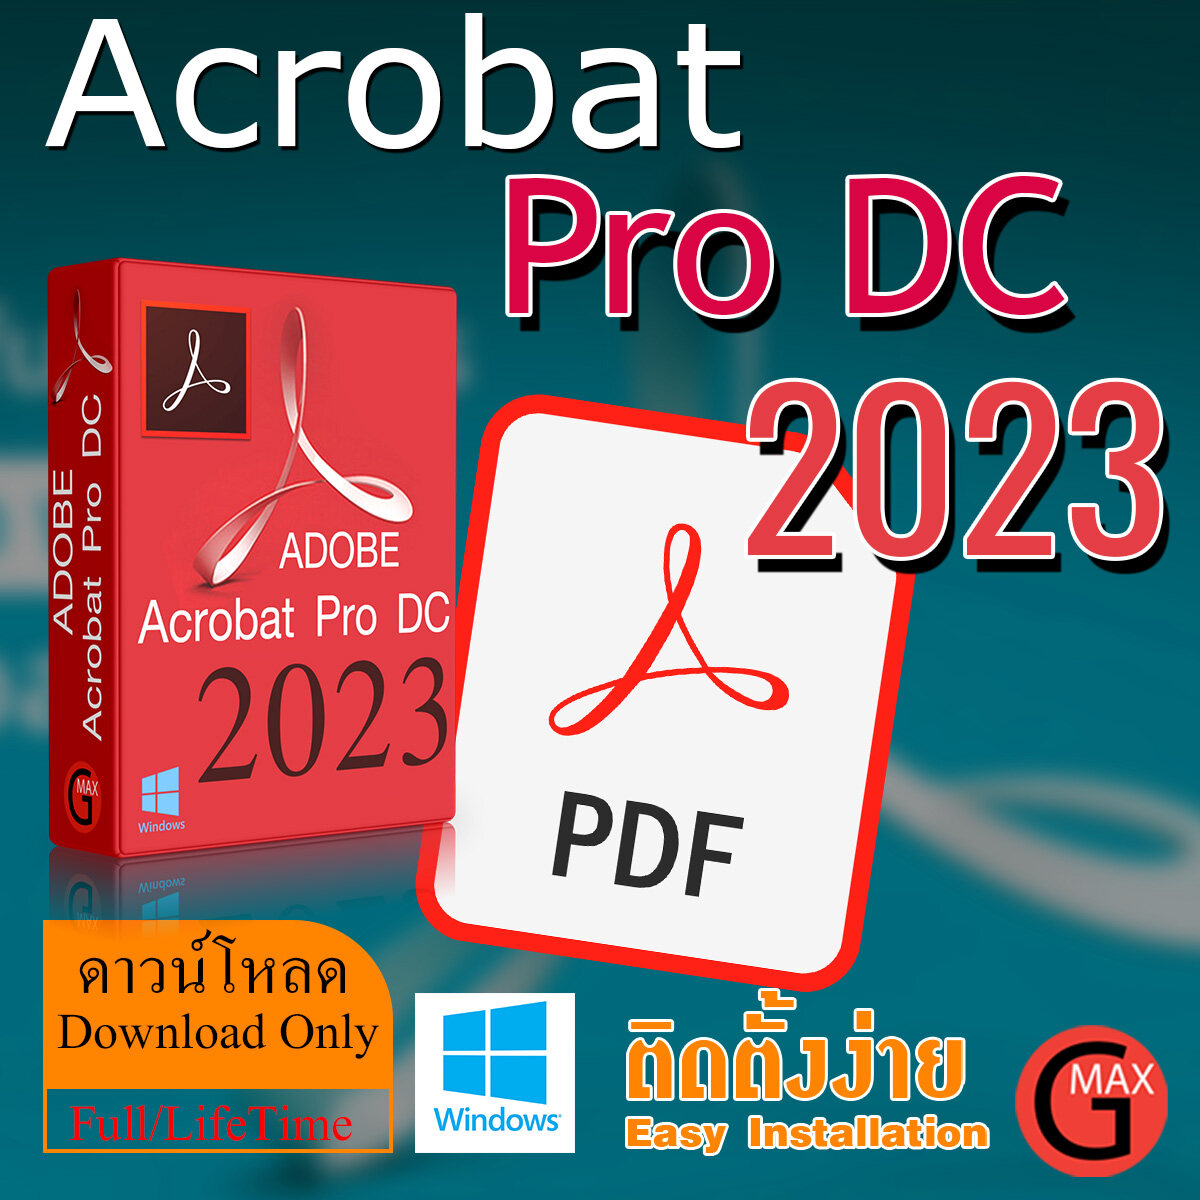 Acrobat Pro Dc ราคาถูก ซื้อออนไลน์ที่ - ก.ค. 2023 | Lazada.Co.Th